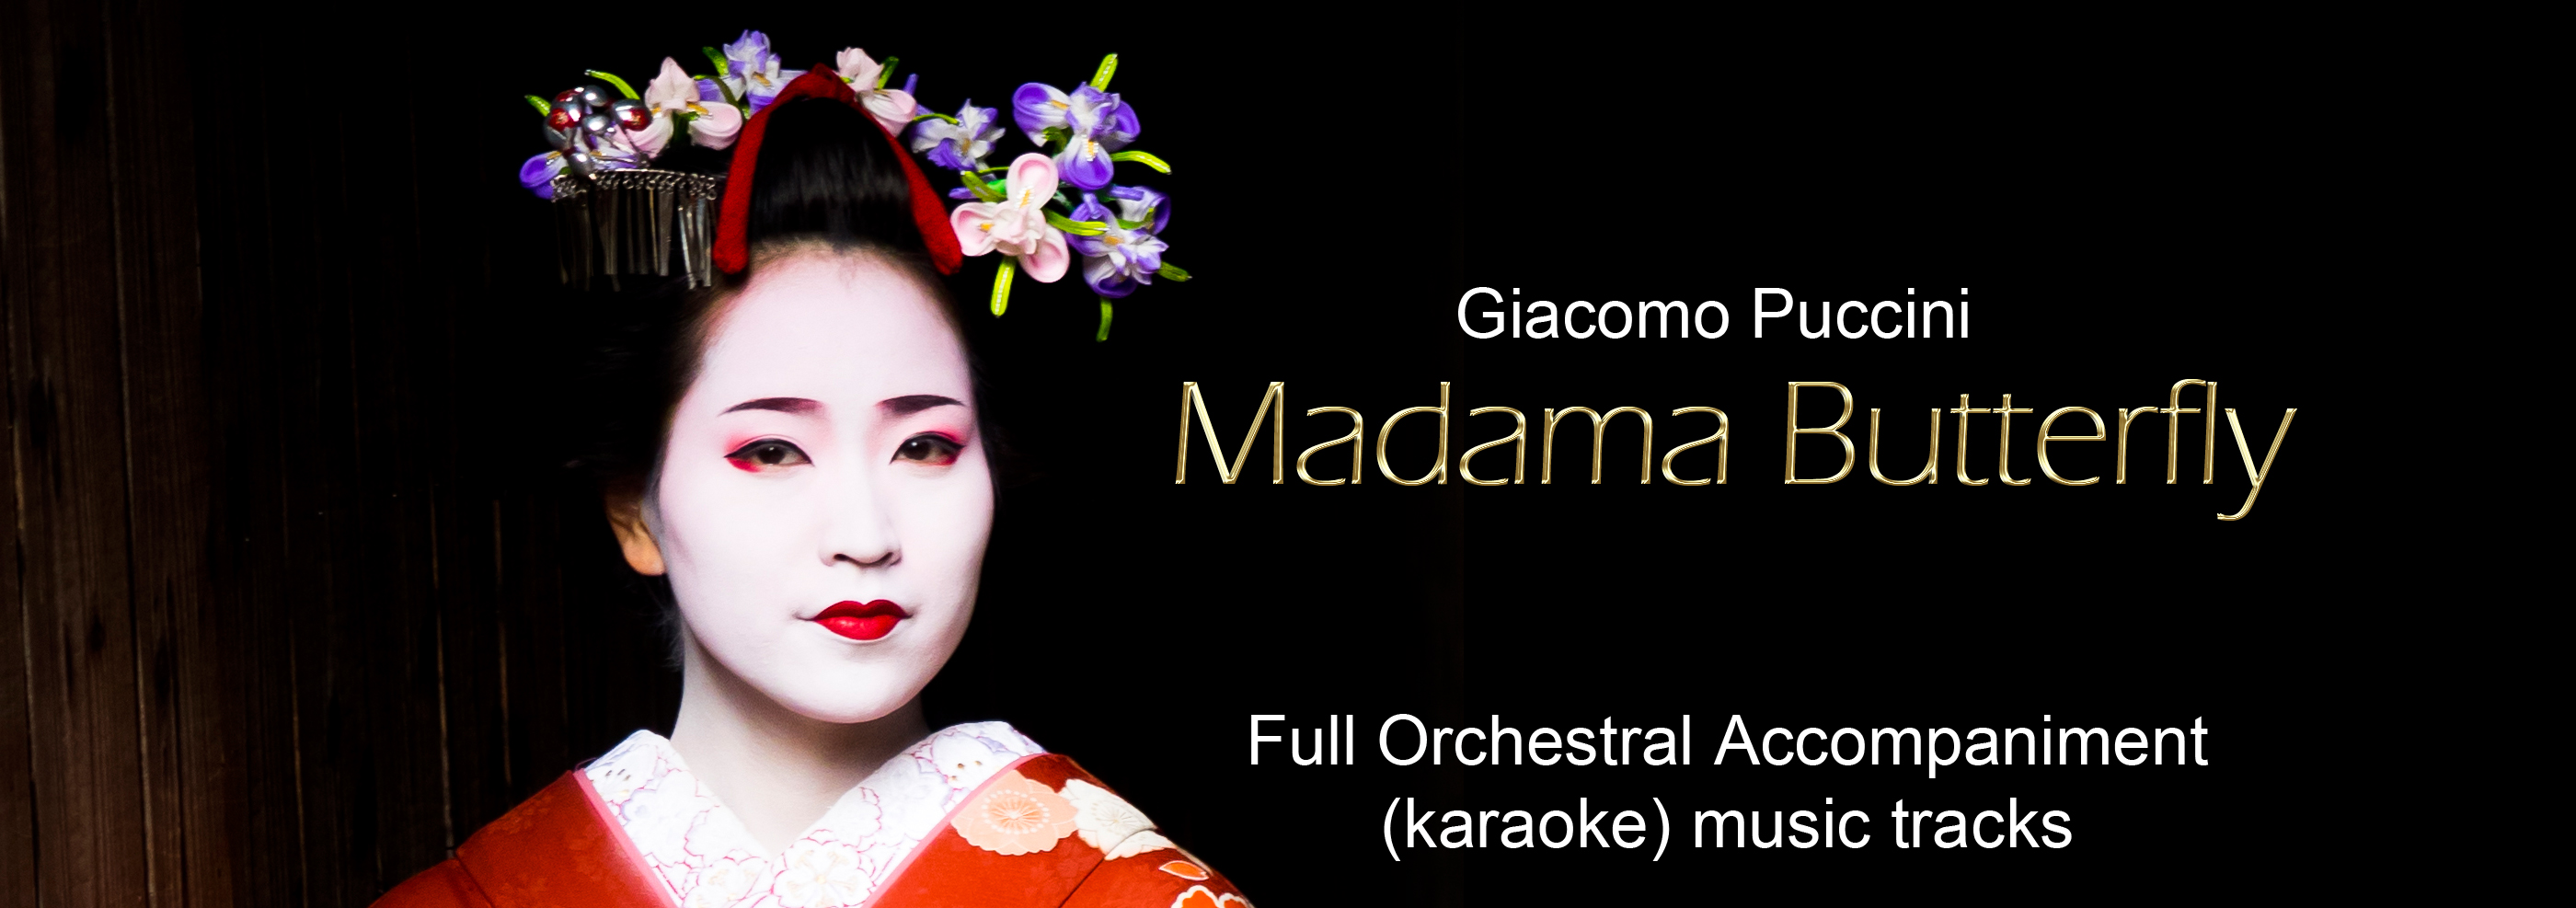 Madama Butterfly, Full Orchestral Accompaniment (karaoke) tracks